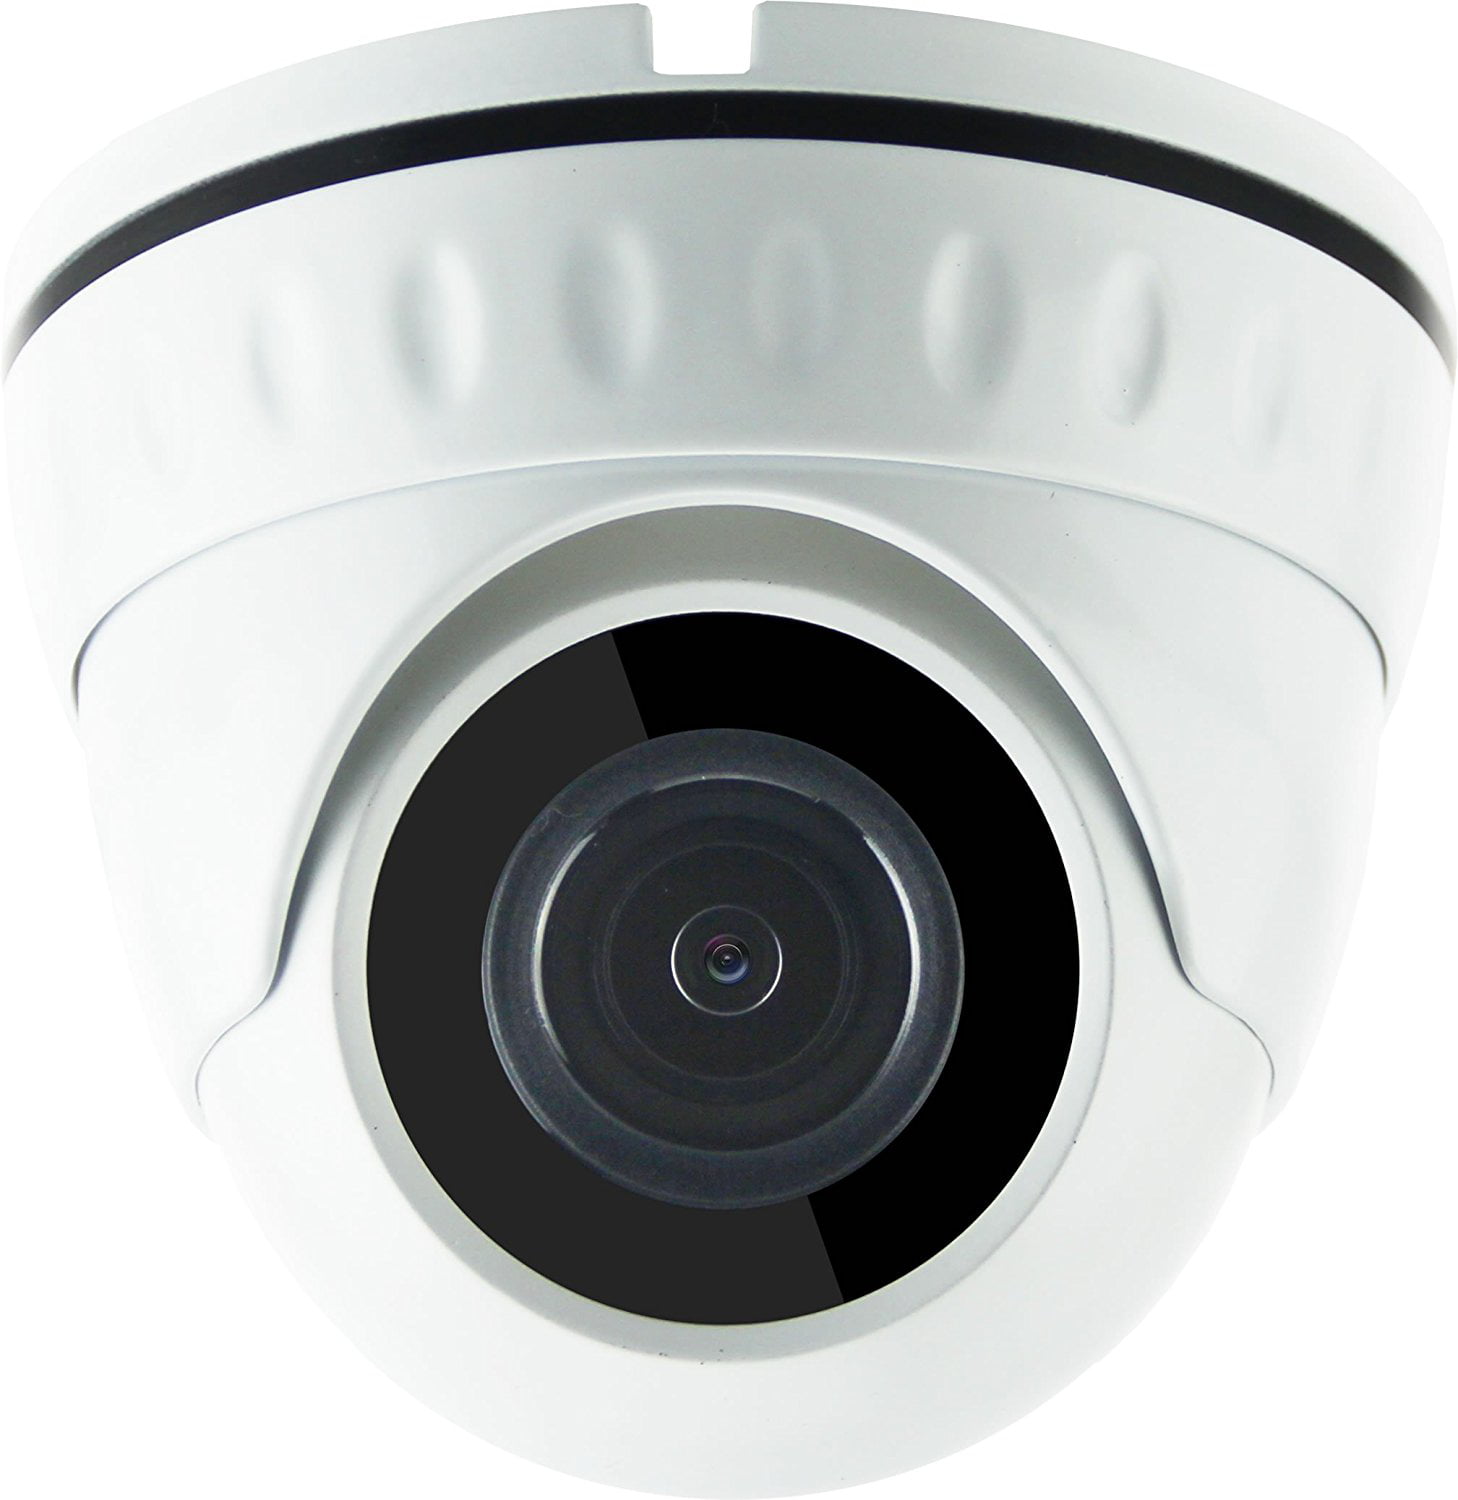 Dome CCTV Camera 2.4MP AHD HD 1080P Sony Lens Security OSD Camera Night Vision 